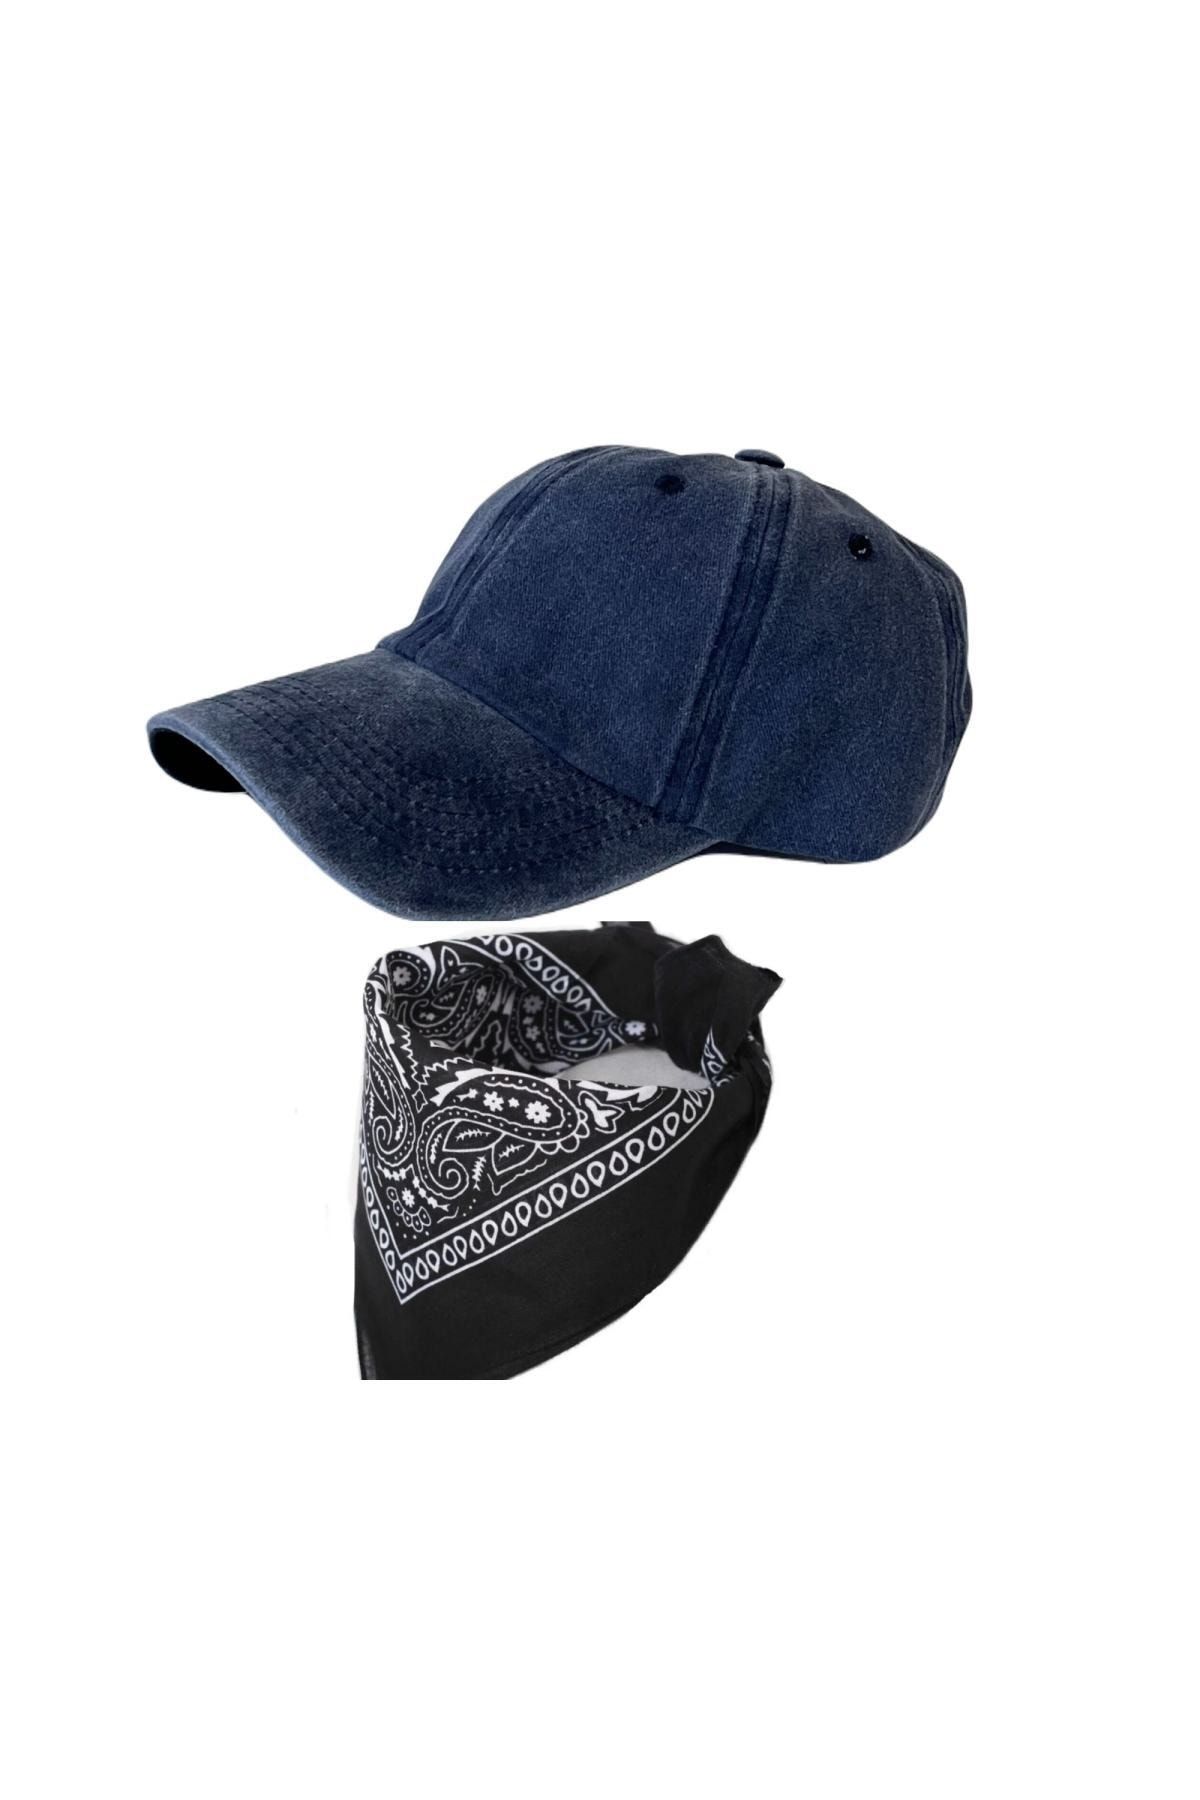 Rupen Kraft Bandana Kombinlidüz Lacivert Renk Yıkamalı Eskitme Şapka Vintage Şapka